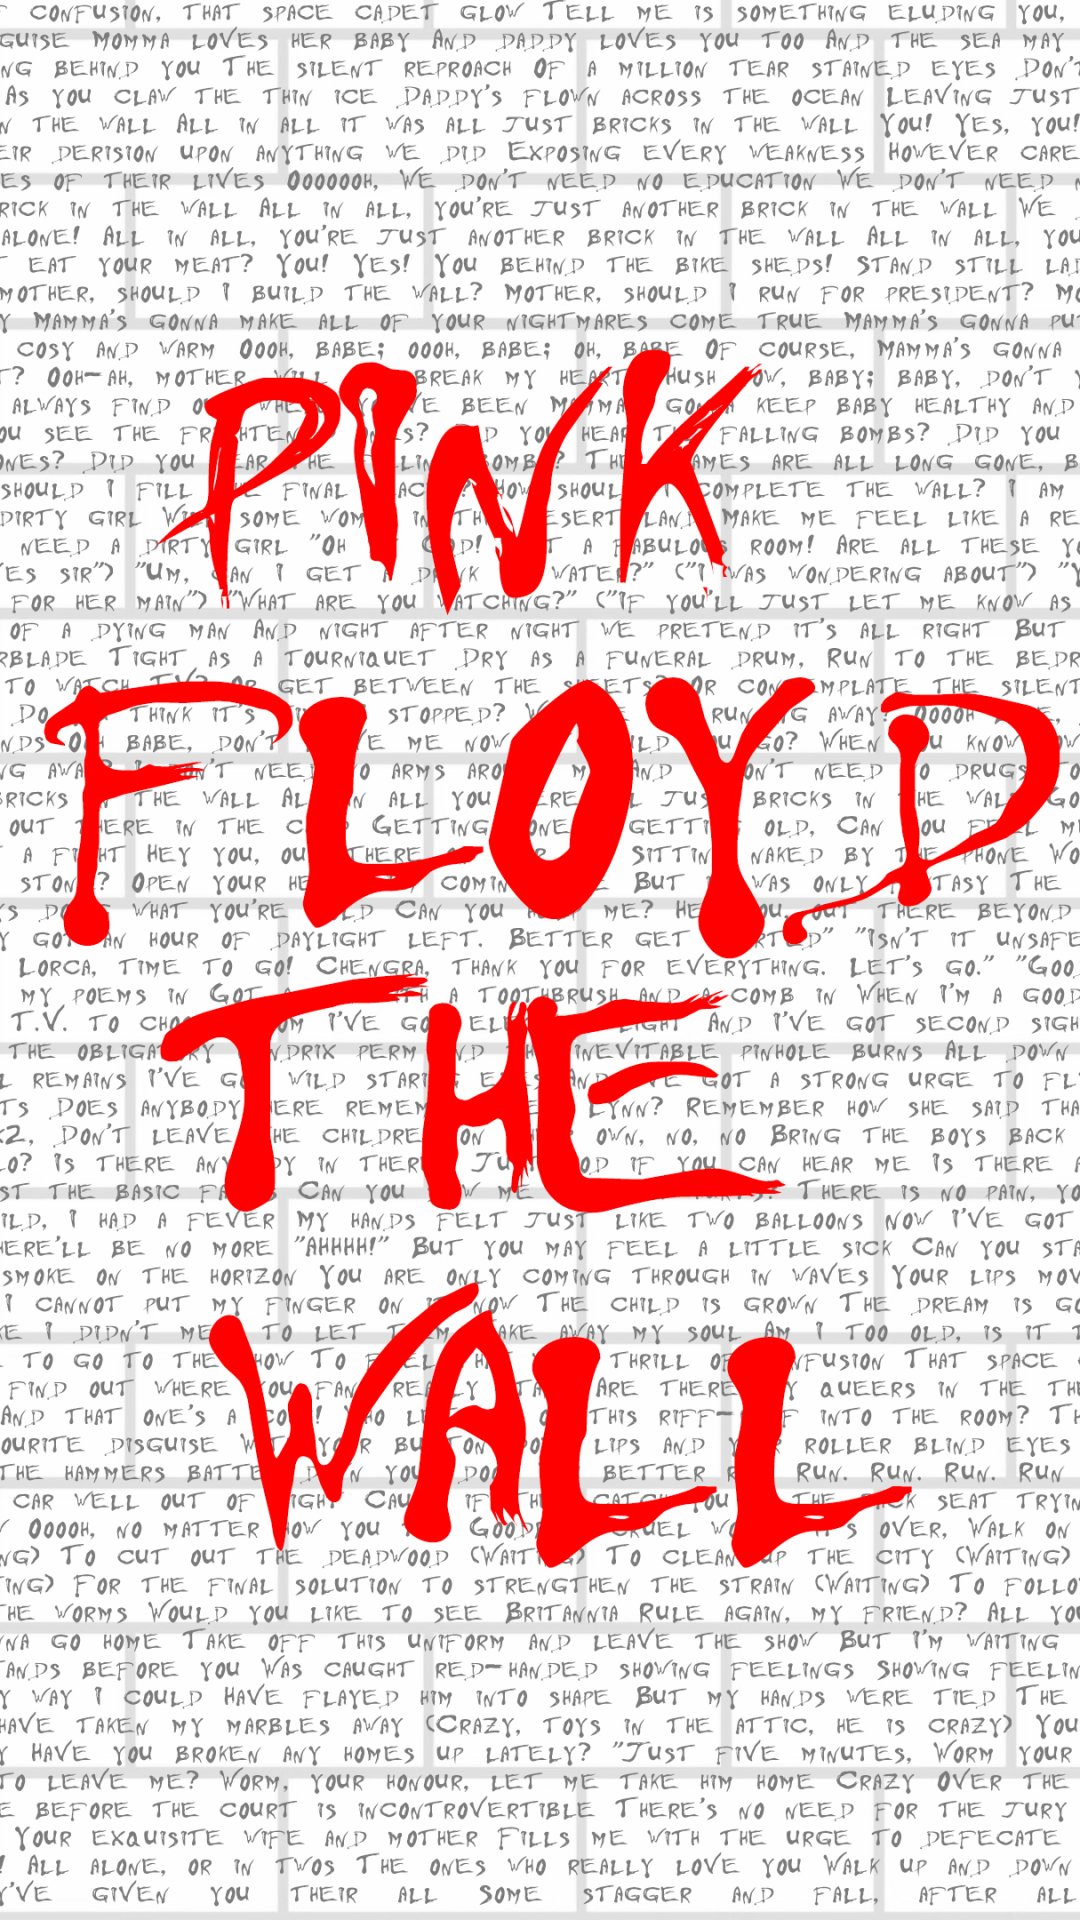 Pink Floyd Phone Wallpaper